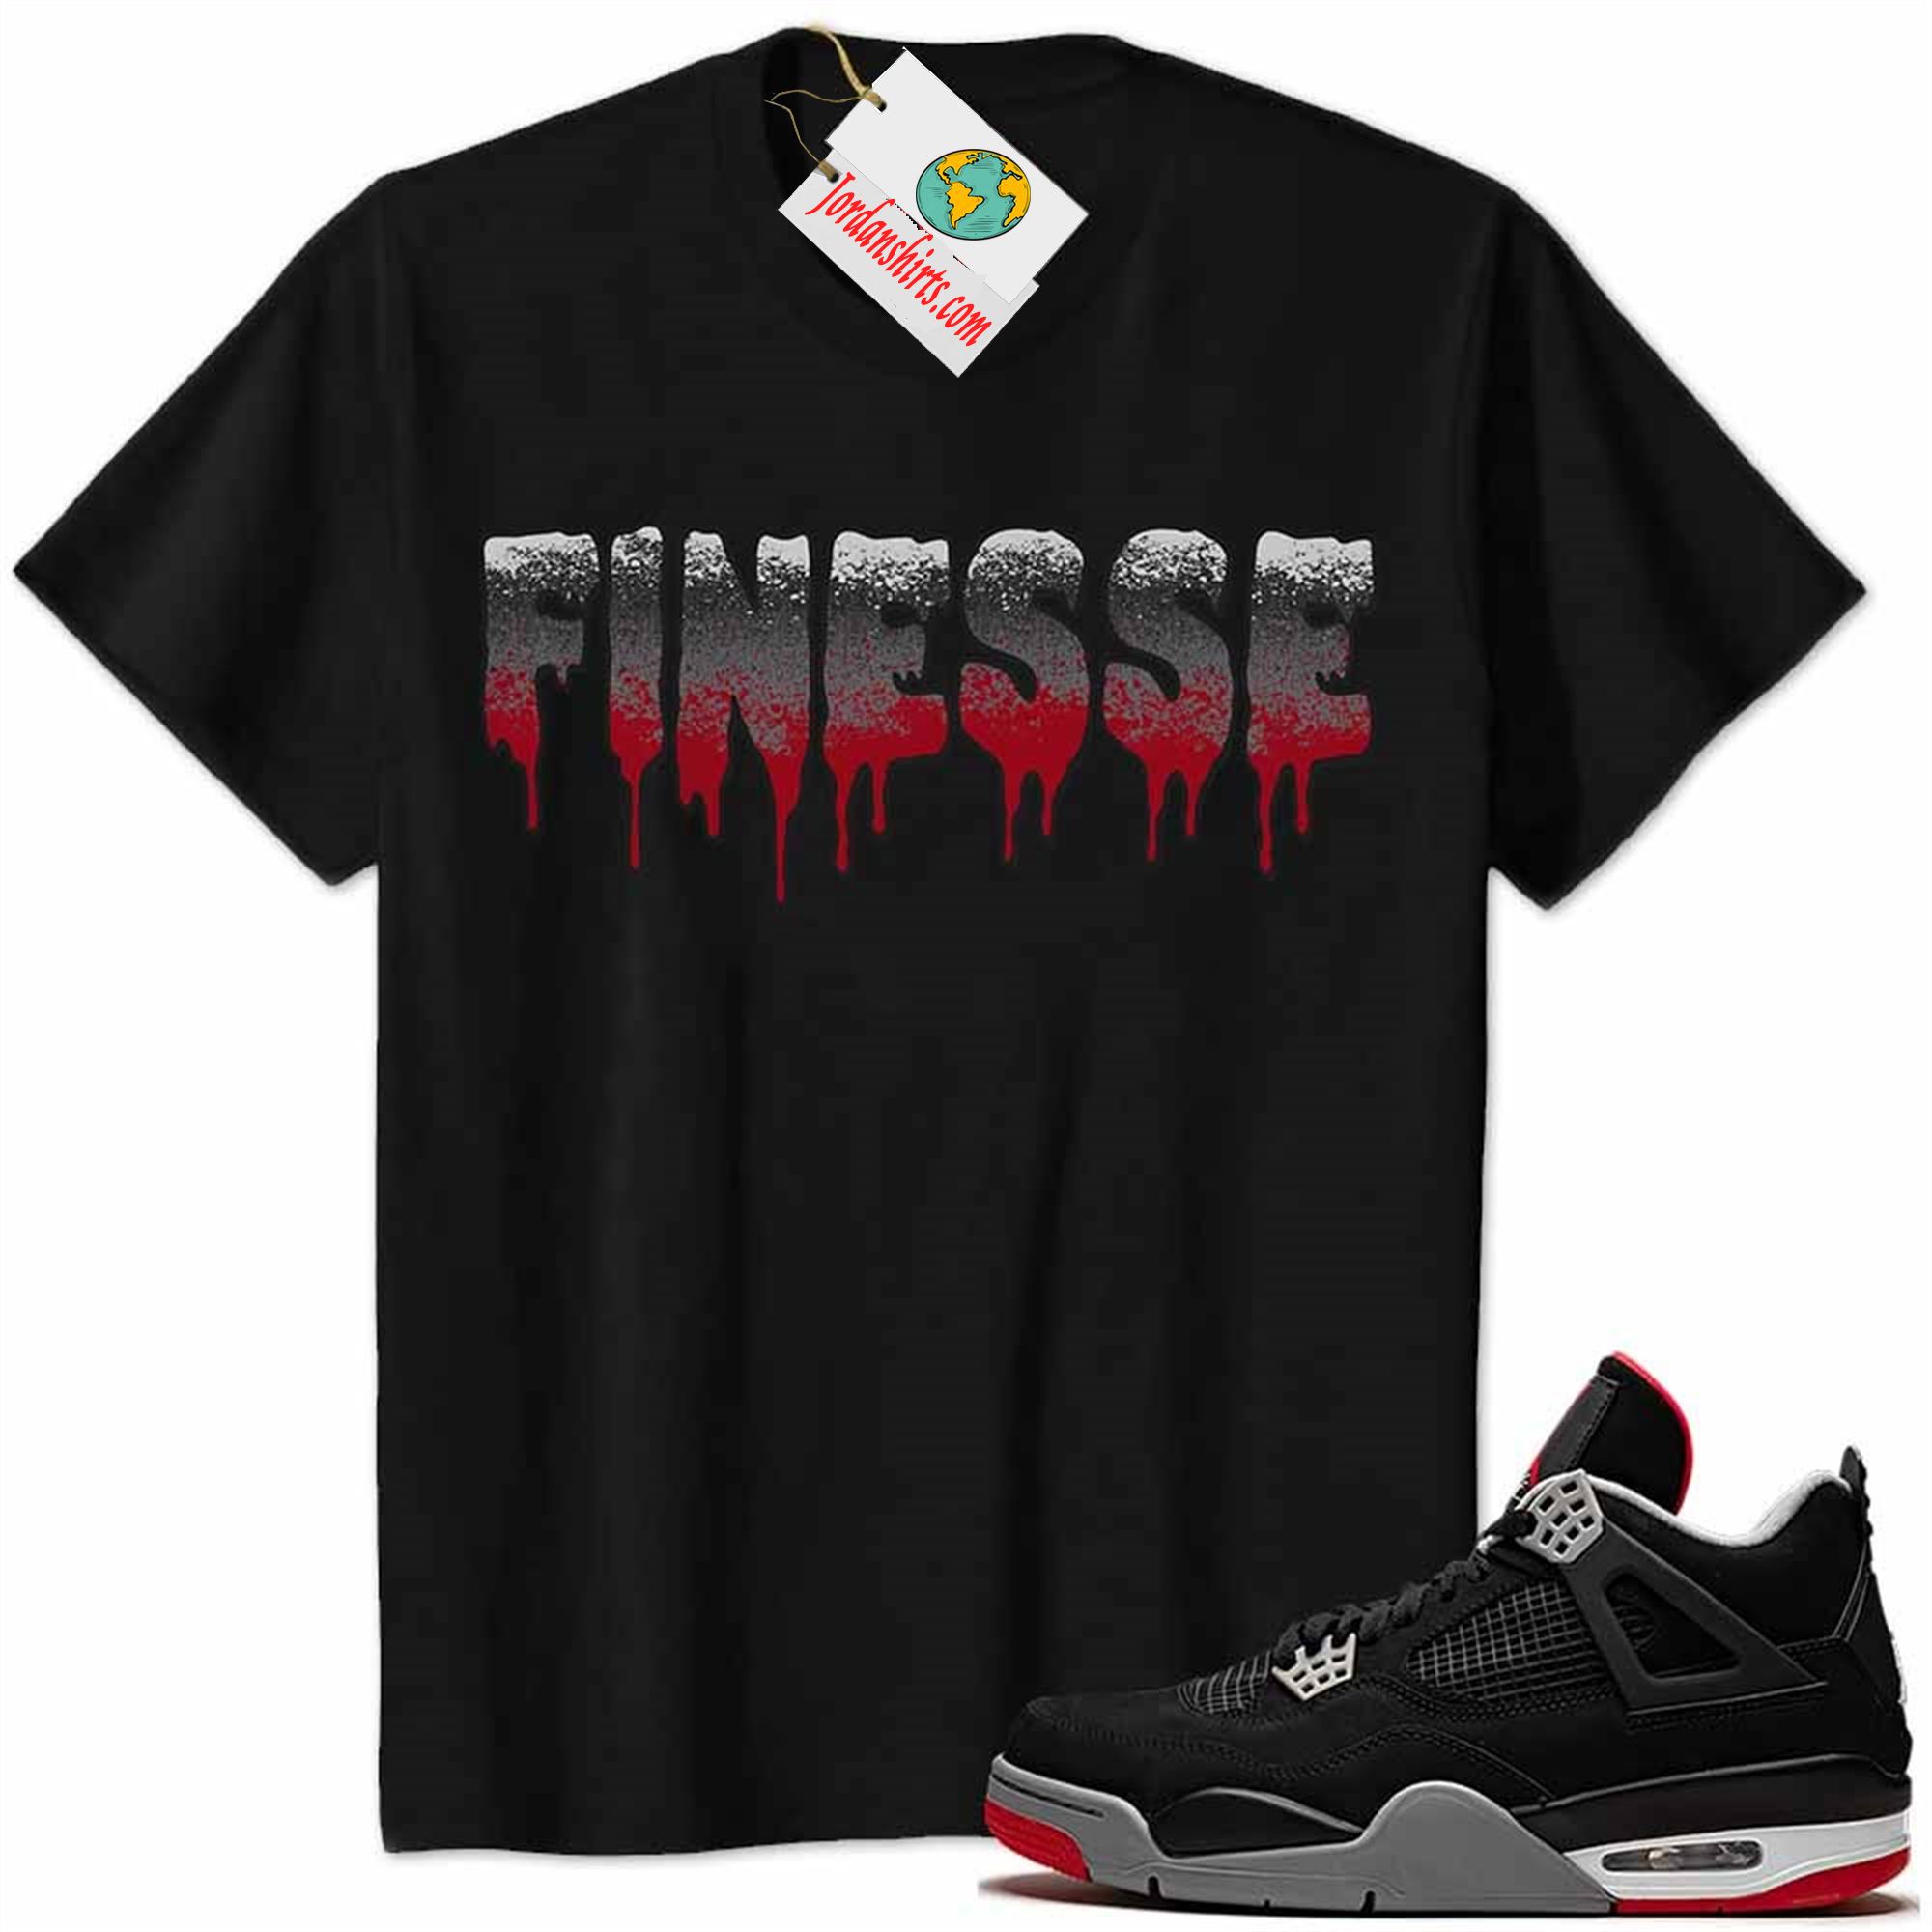 Jordan 4 Shirt, Jordan 4 Bred Shirt Finesse Drip Black Full Size Up To 5xl